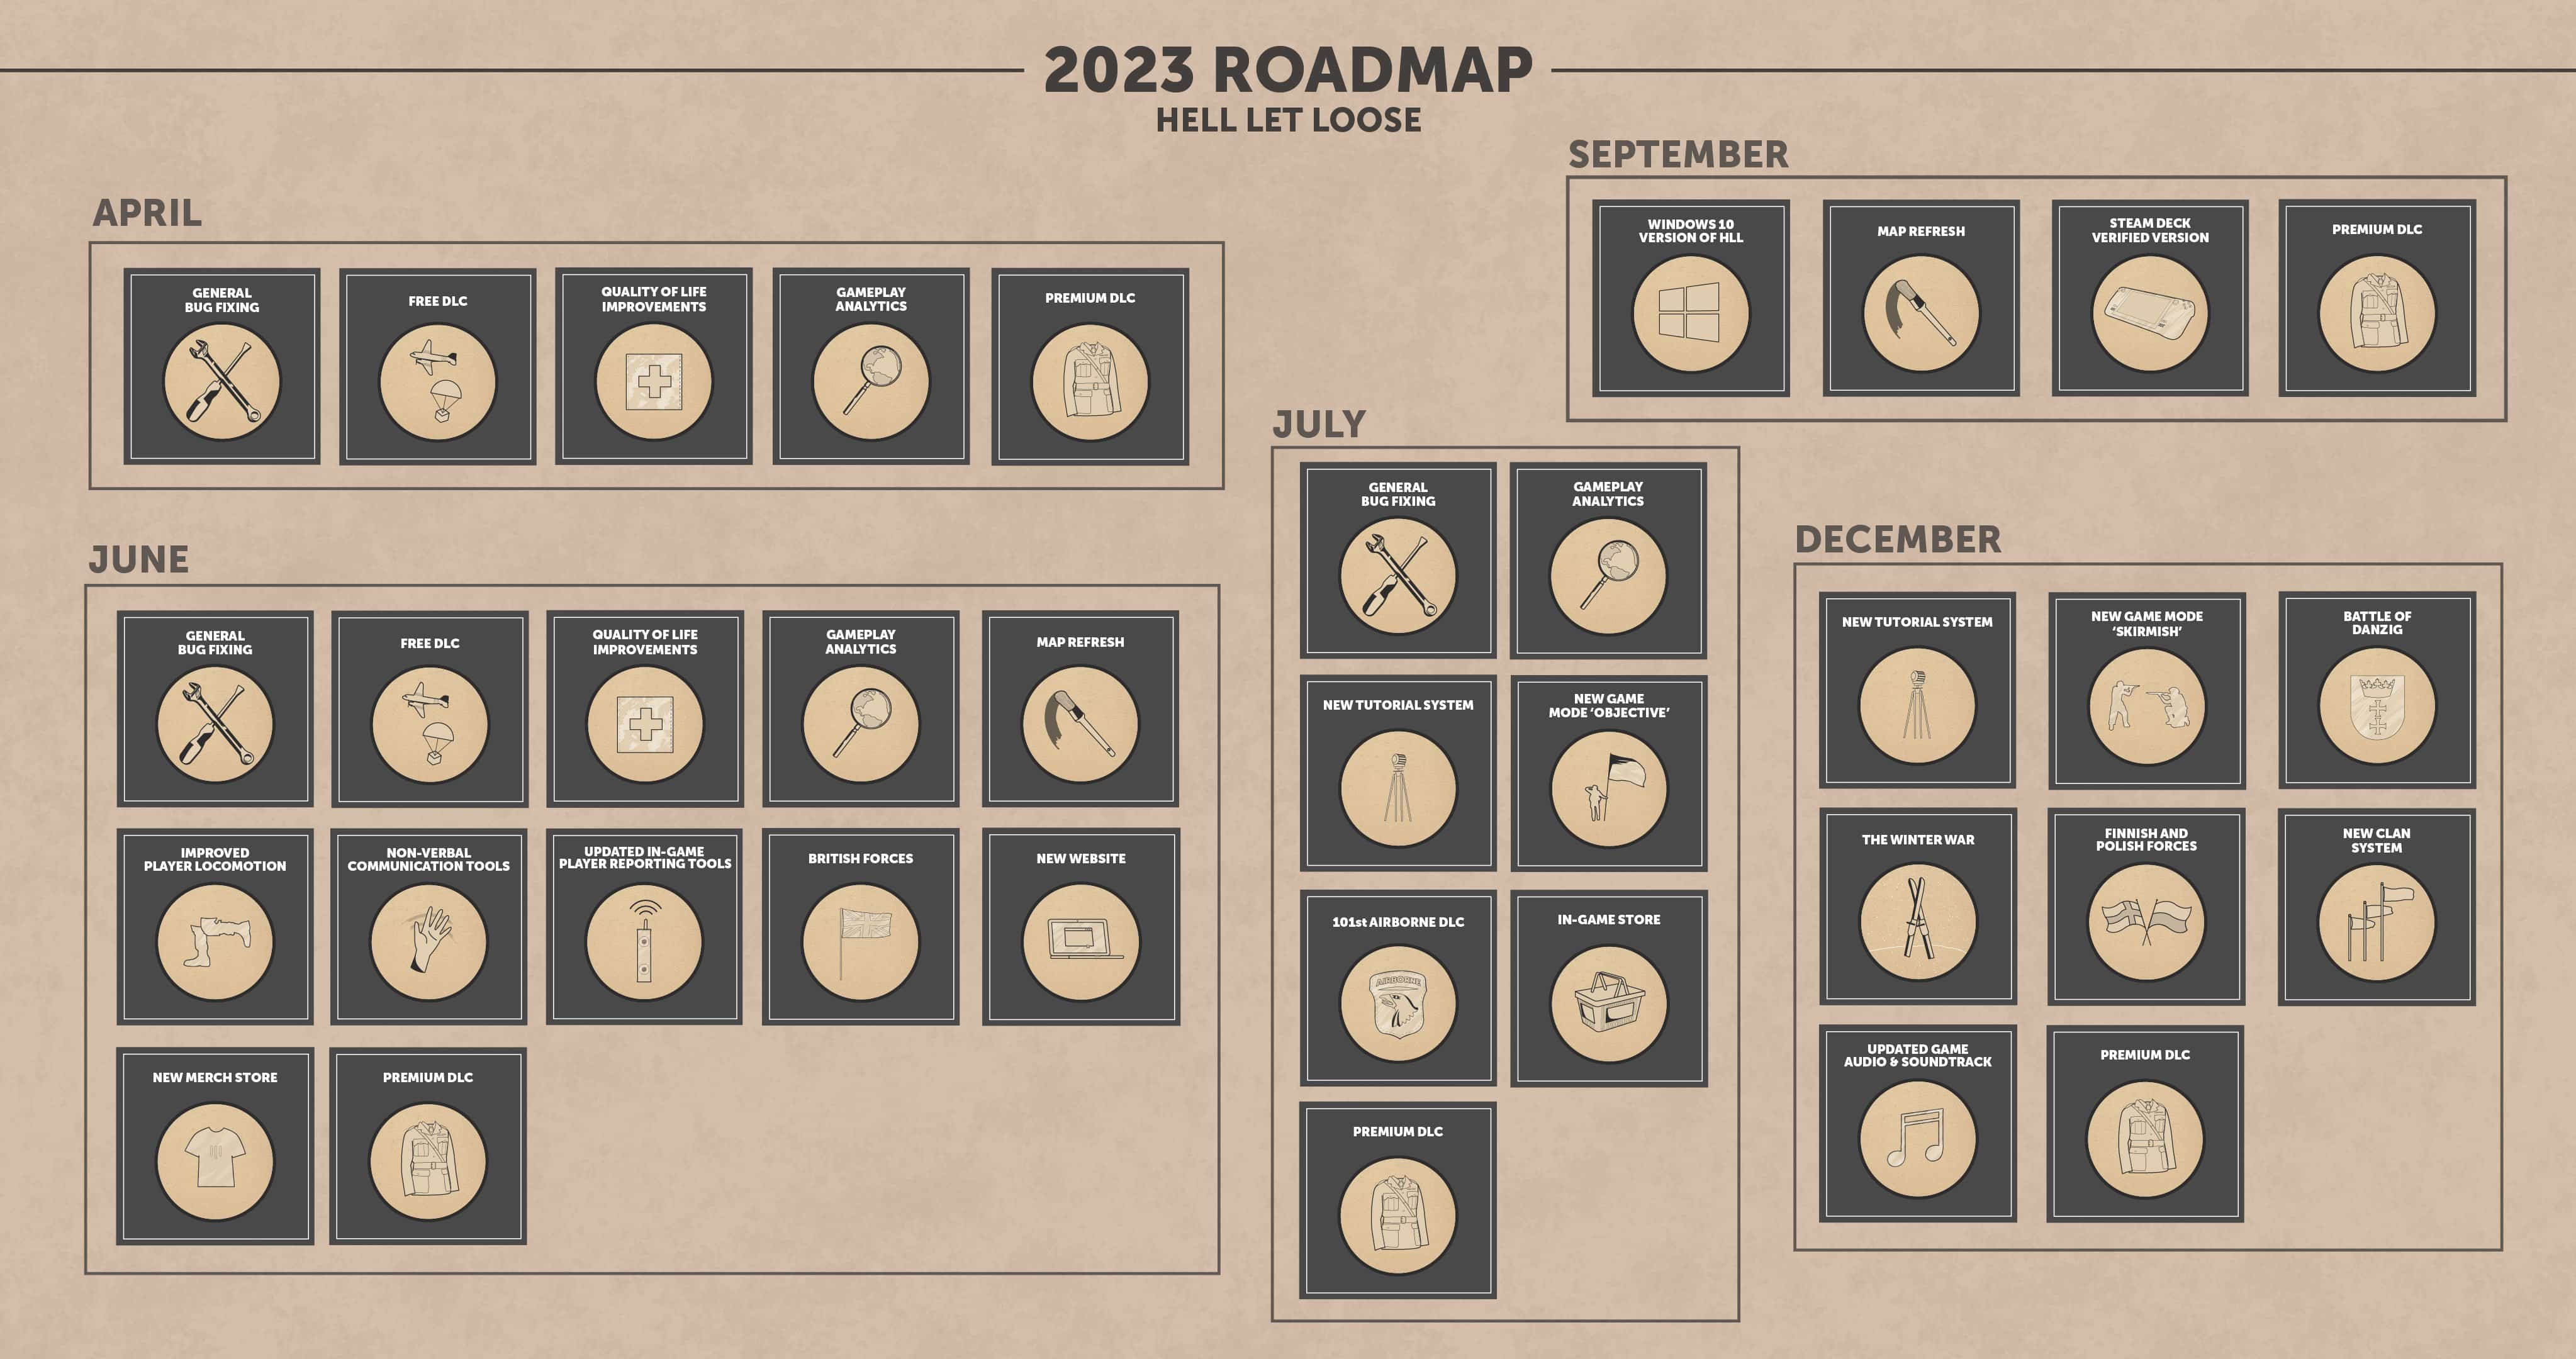 Hell Let Loose Roadmap für 2023